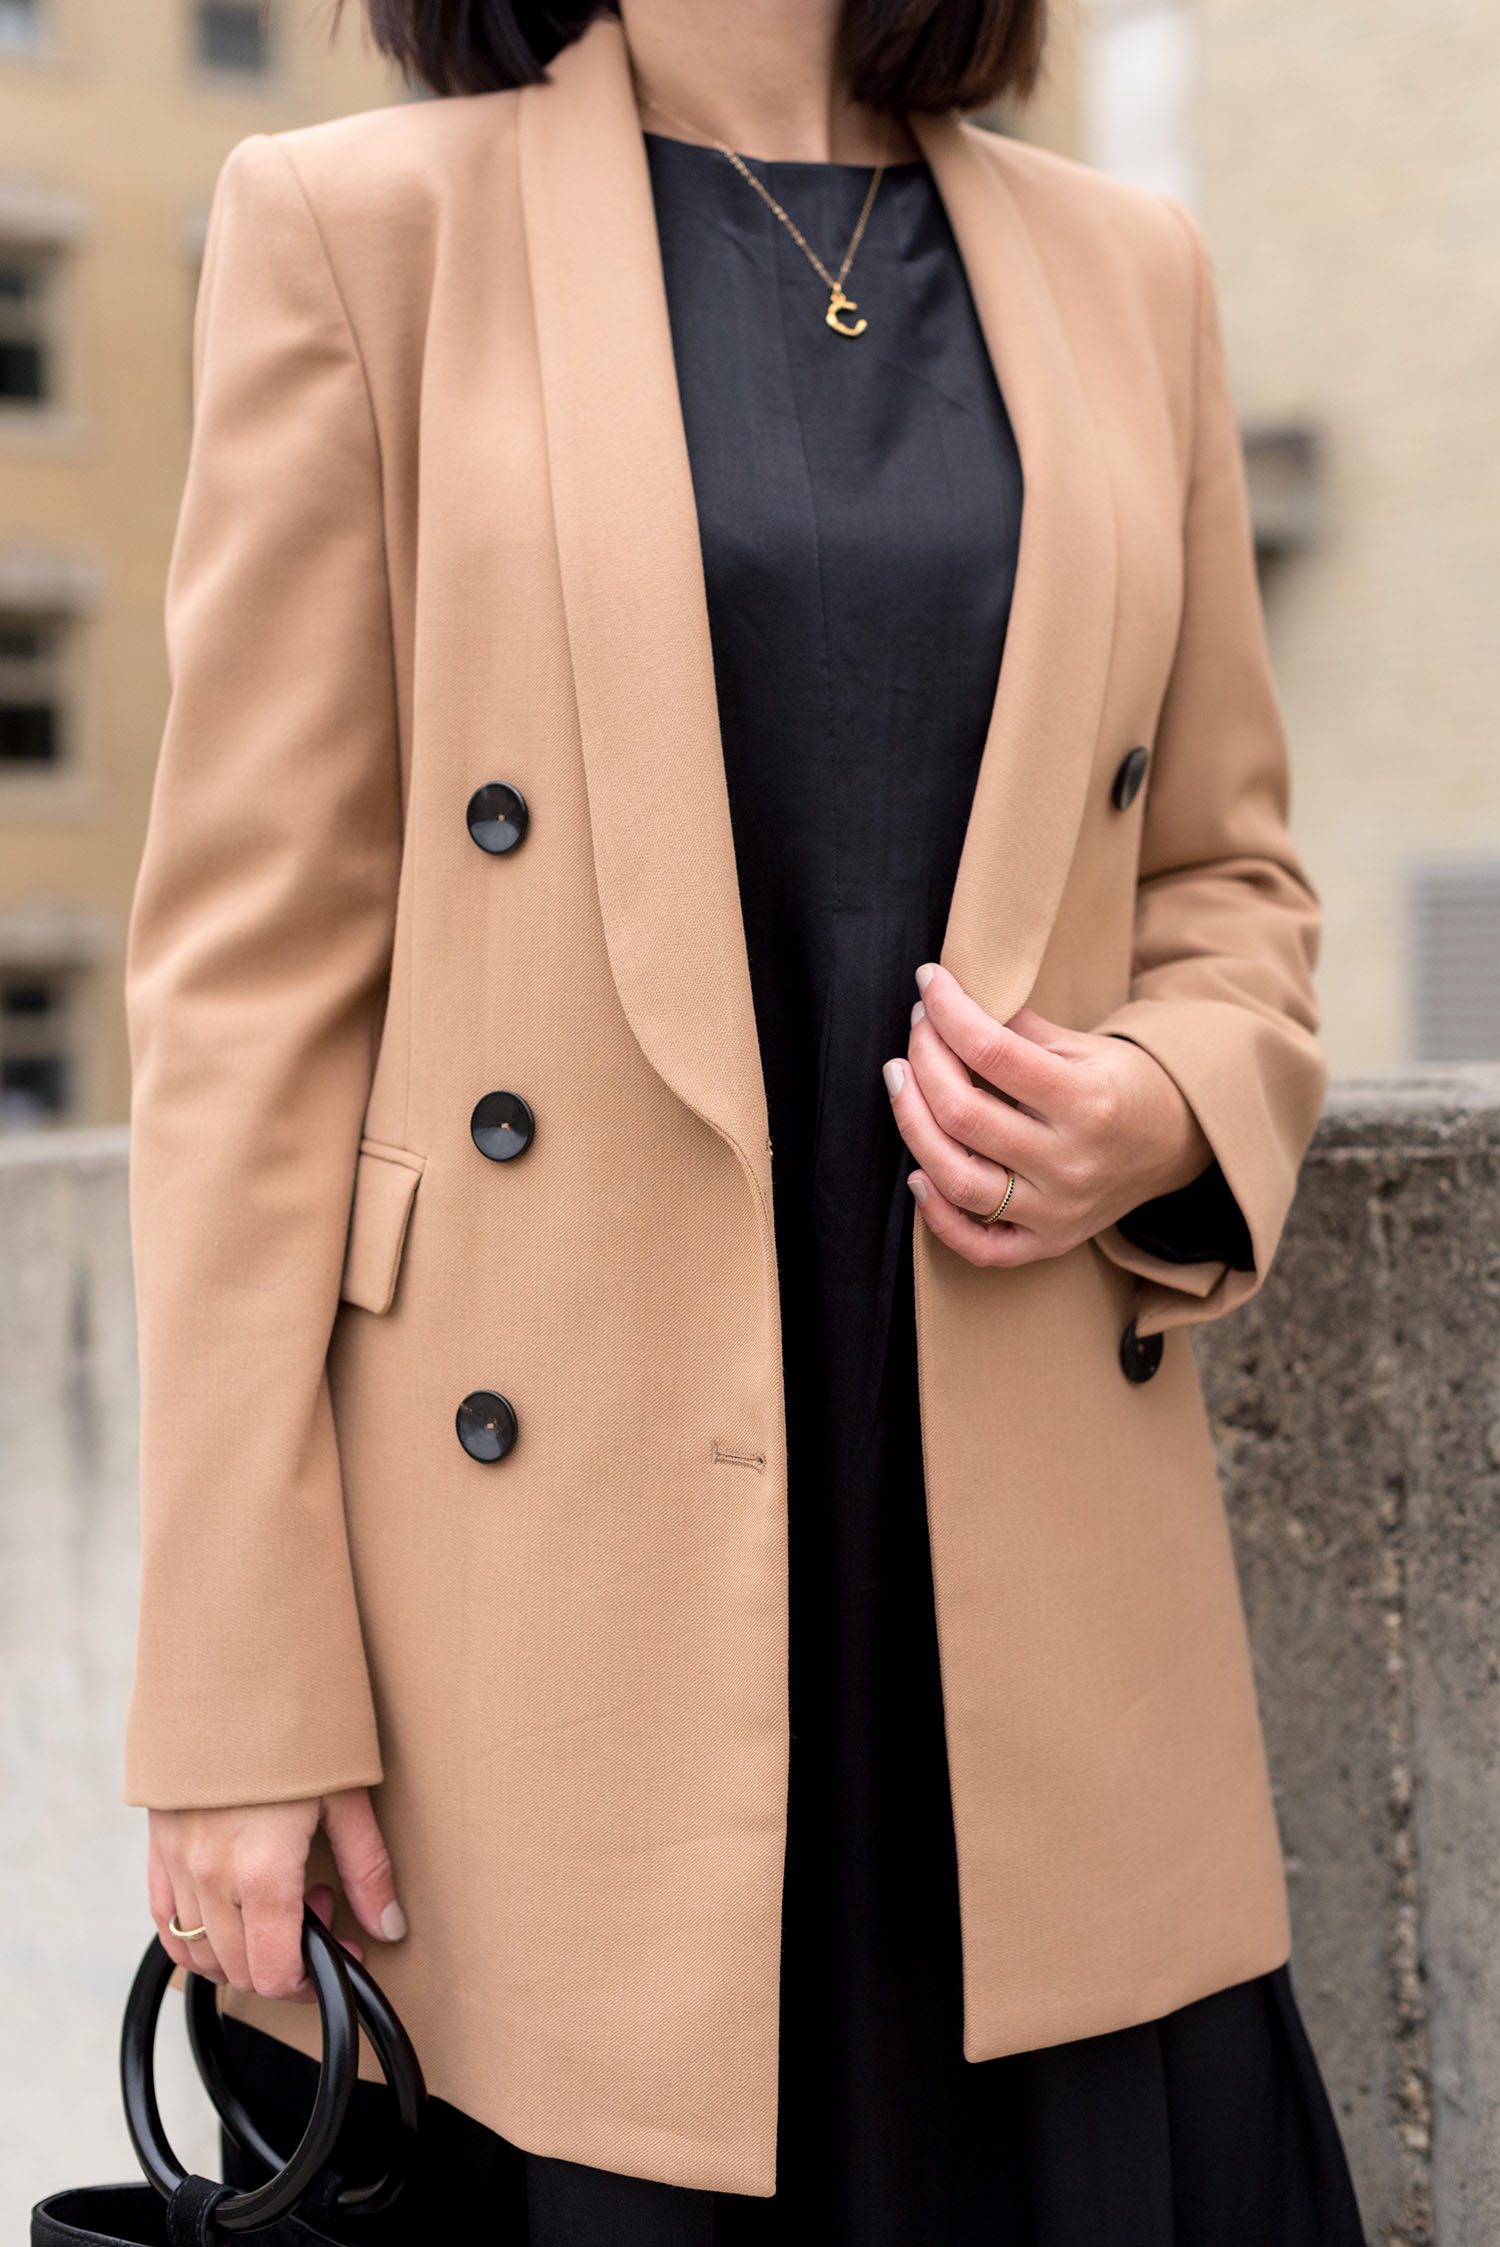 Outfit details on top Canadian fashion blogger Cee Fardoe of Coco & Vera, including a Zara camel blazer and Celine alphabet necklace